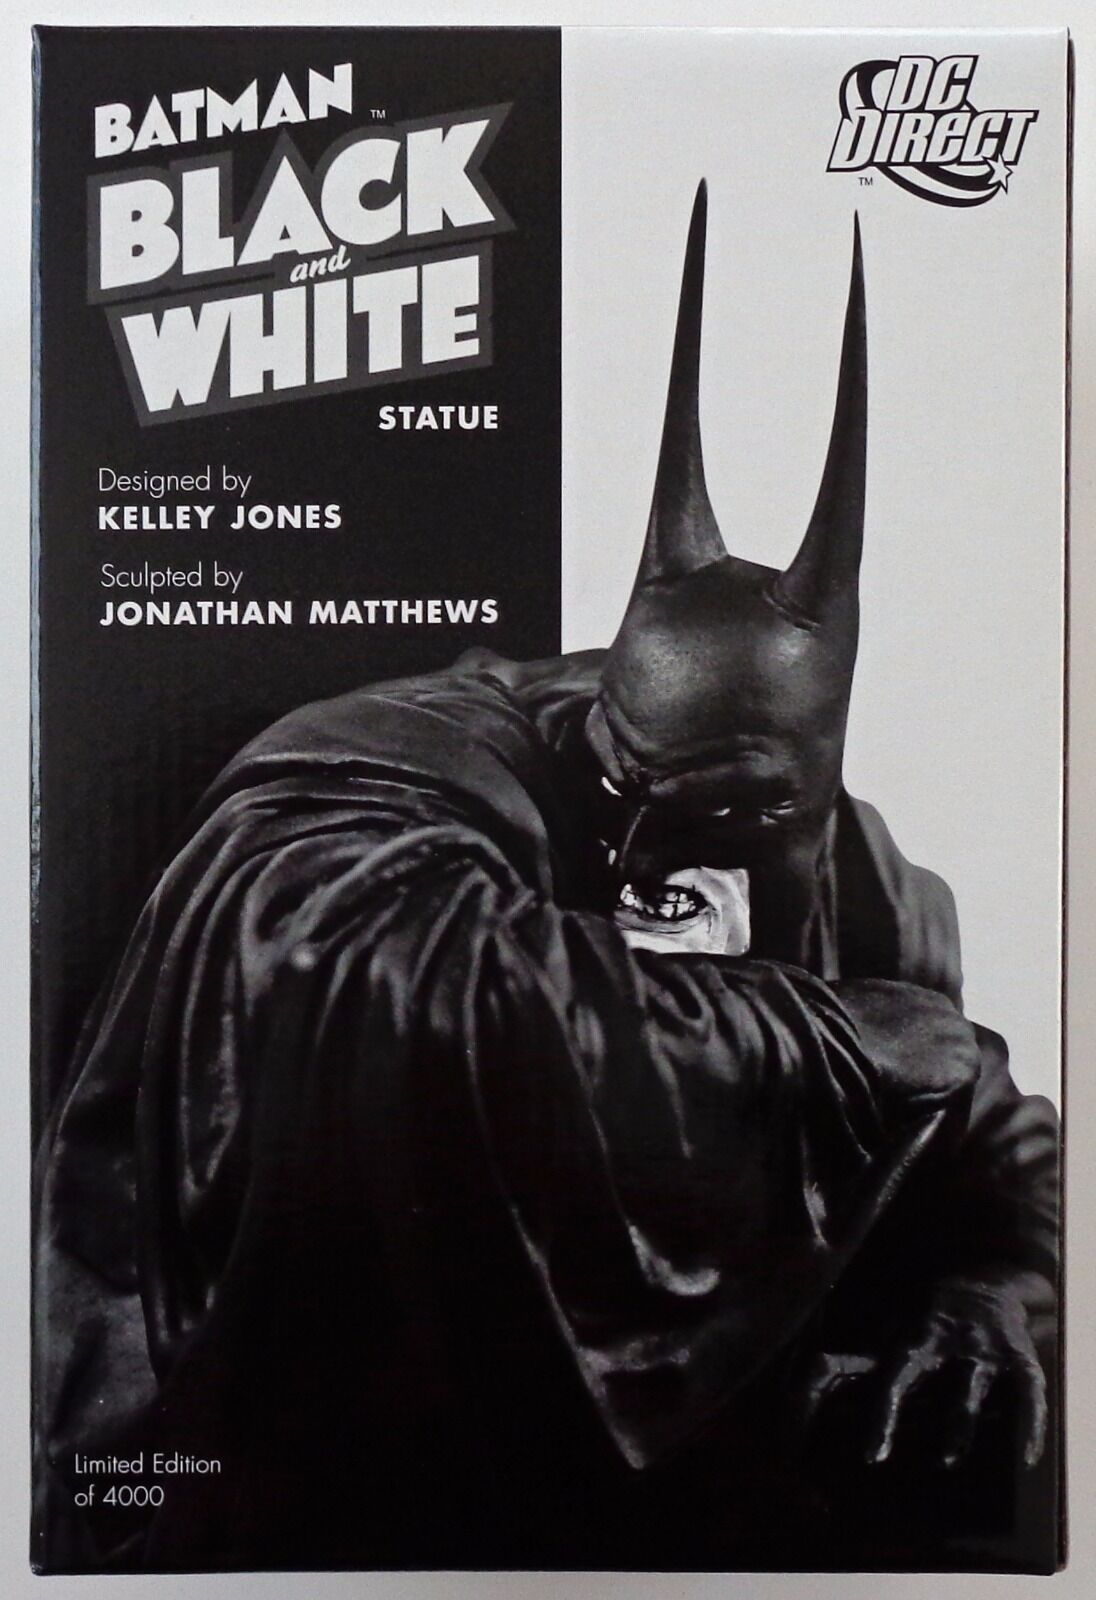 DC Direct Batman Black and White Statue - Jones/Matthews [3422 of 4000] - MINT